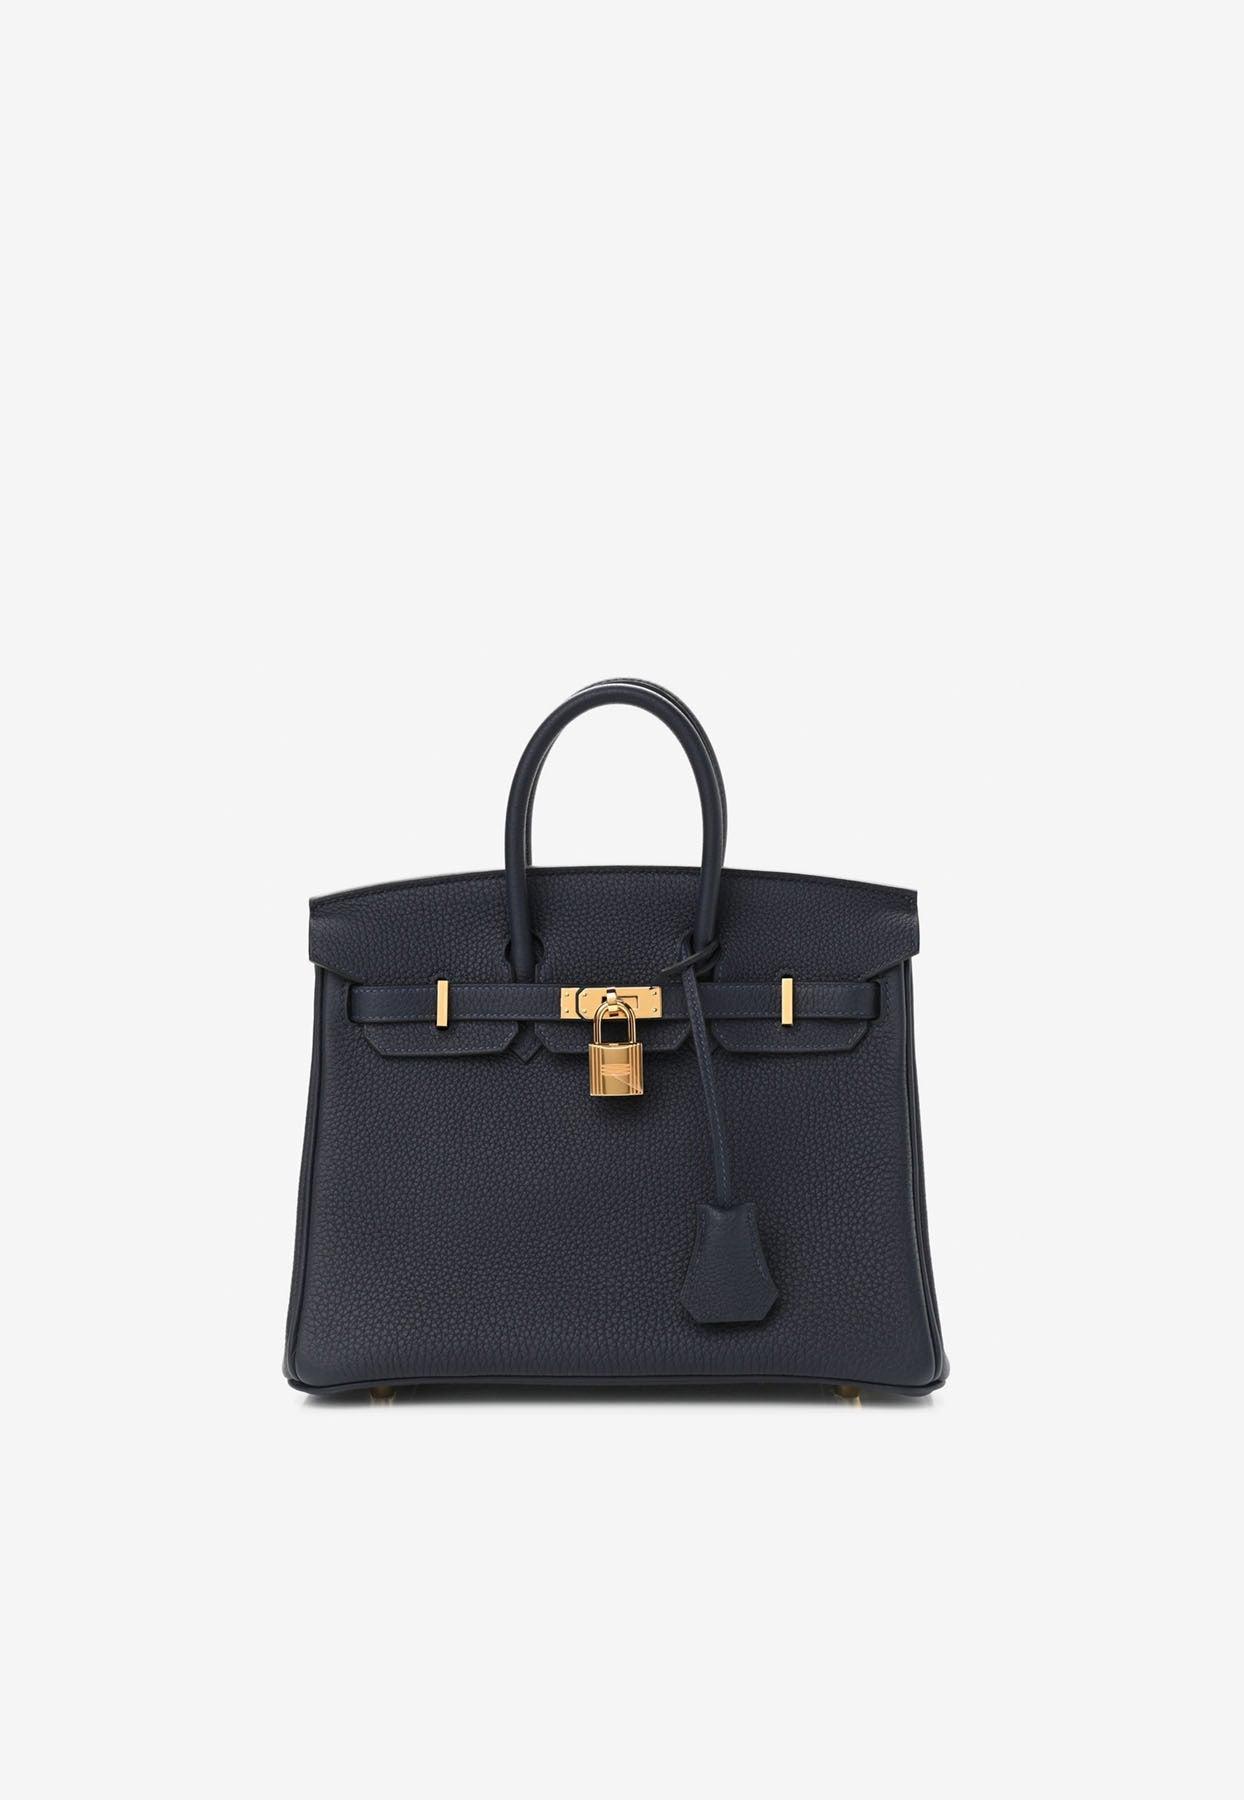 Hermès Birkin 25 Top Handle Bag In Bleu Nuit Togo With Gold